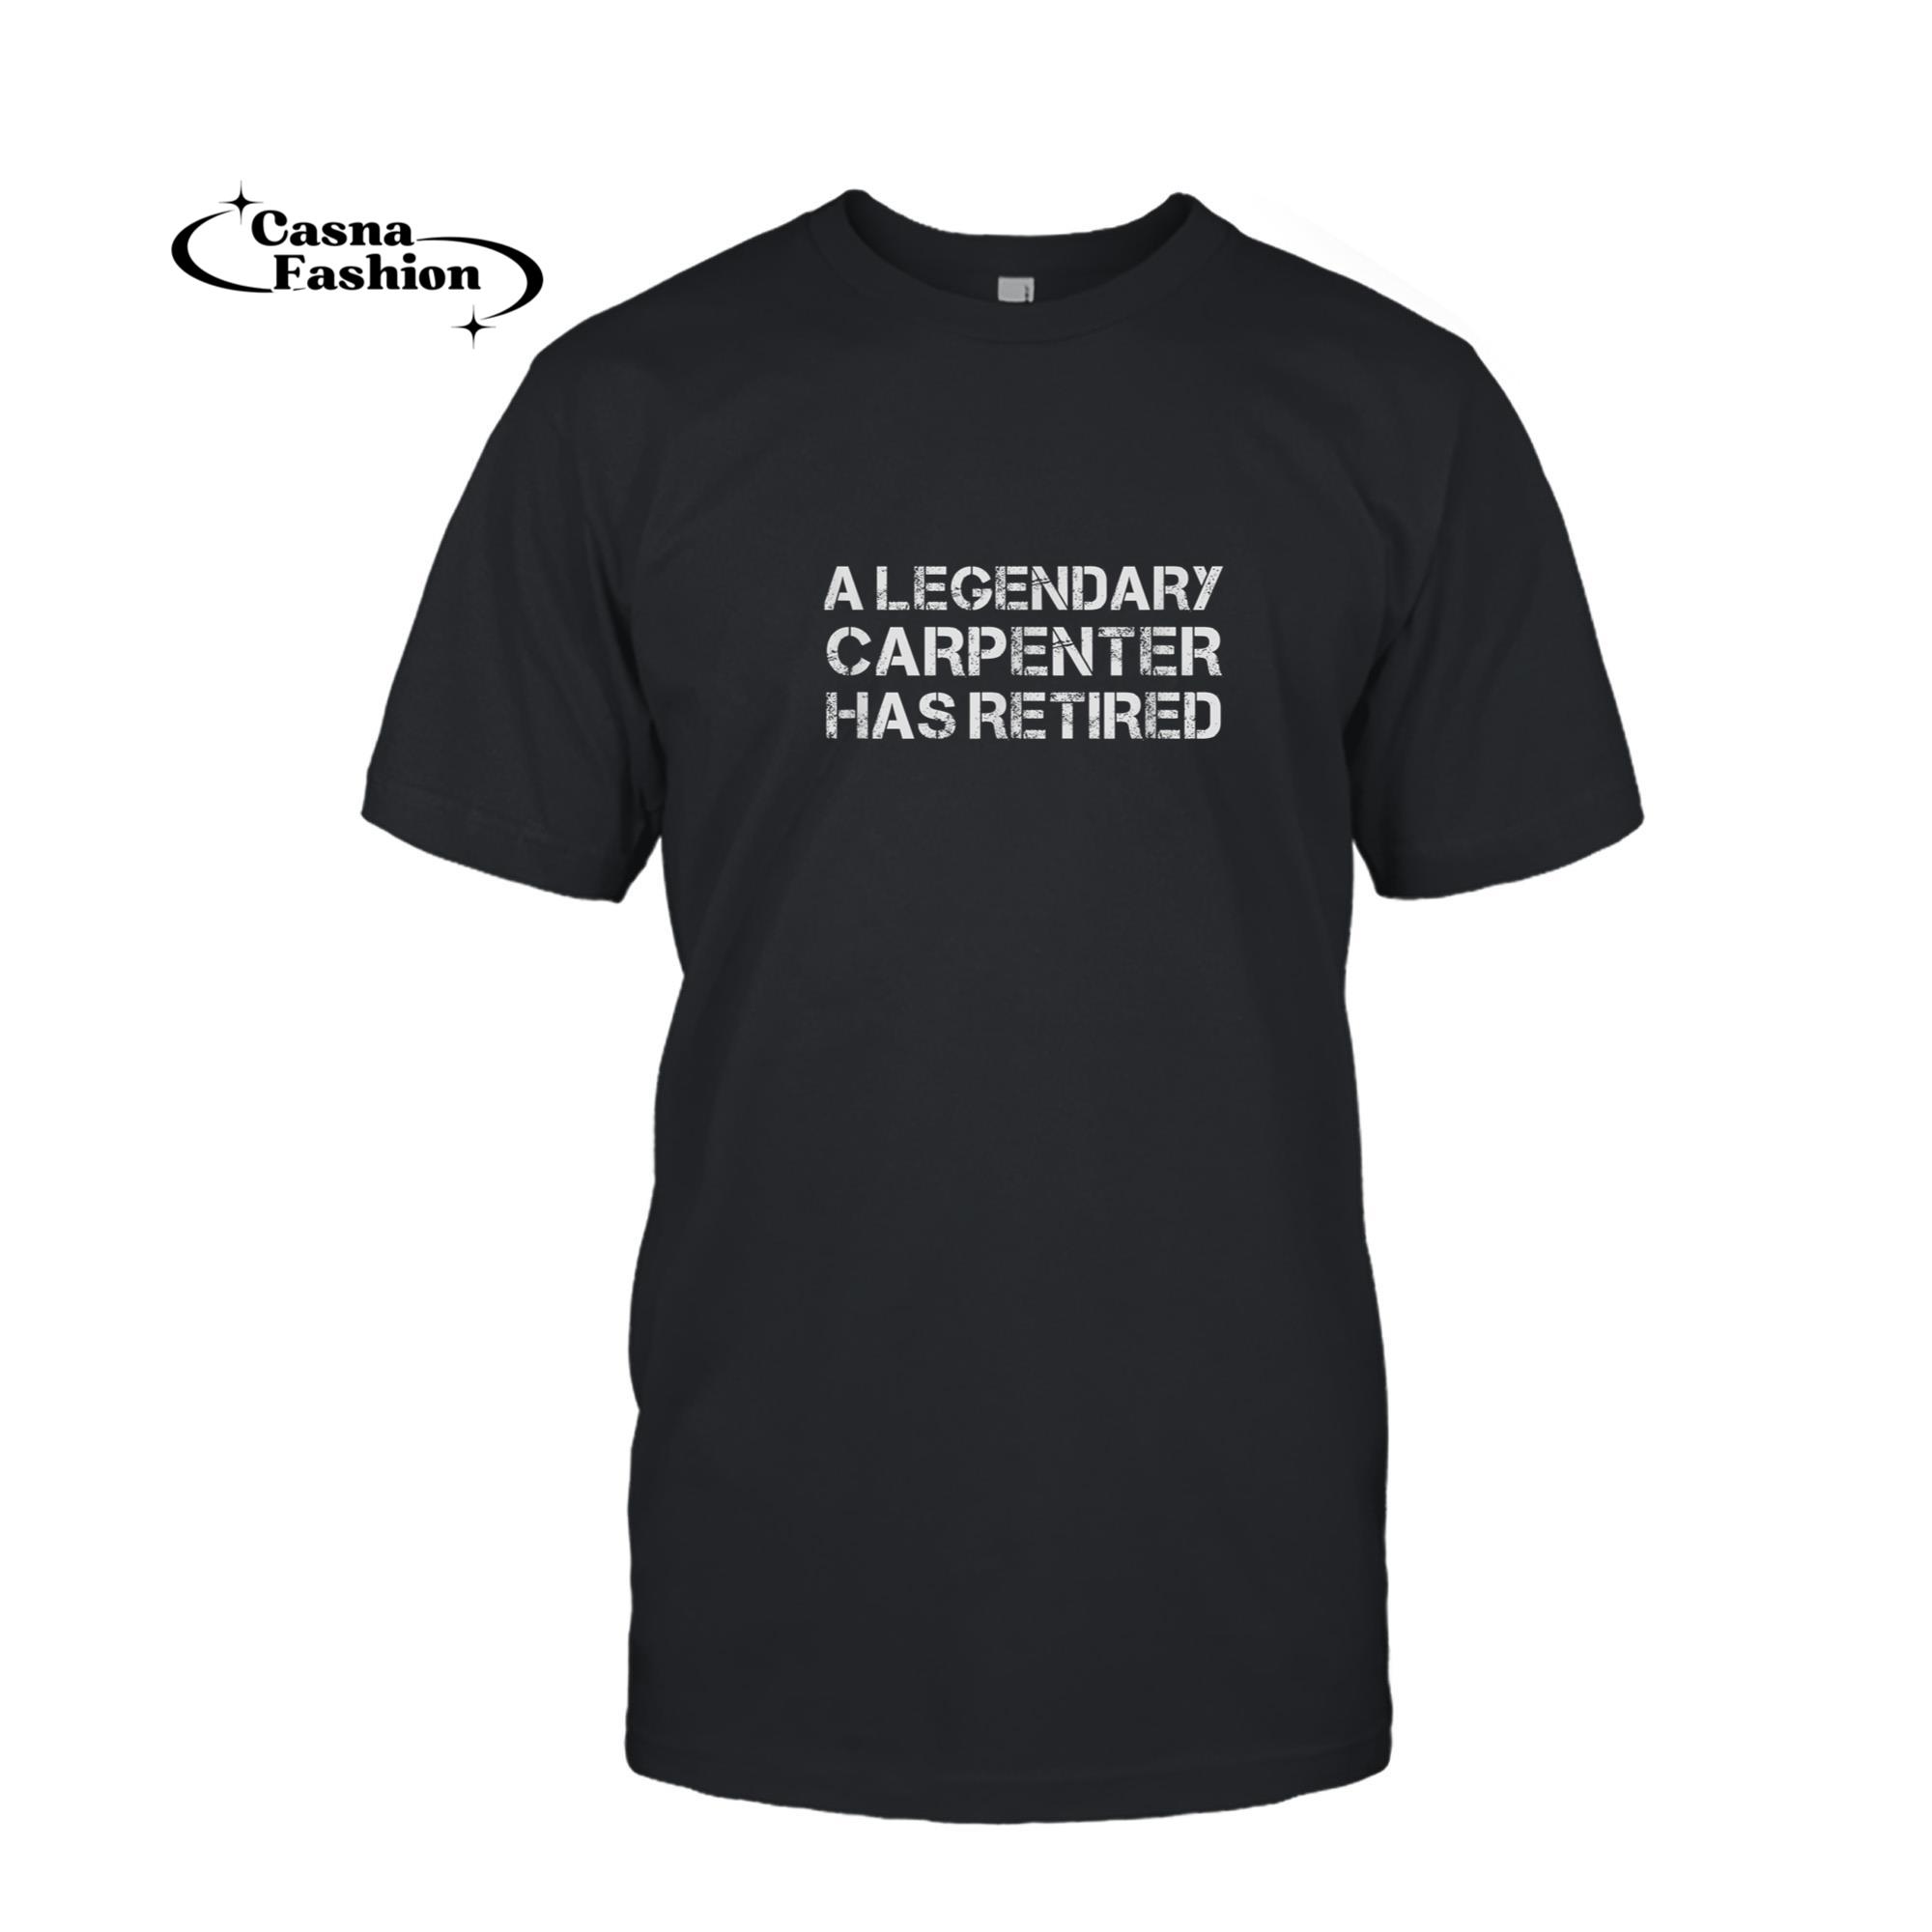 casnafashion_T-shirt_A Legendary Carpenter Has Retired Retiree Retireement Gift T-Shirt_T-shirt_Black